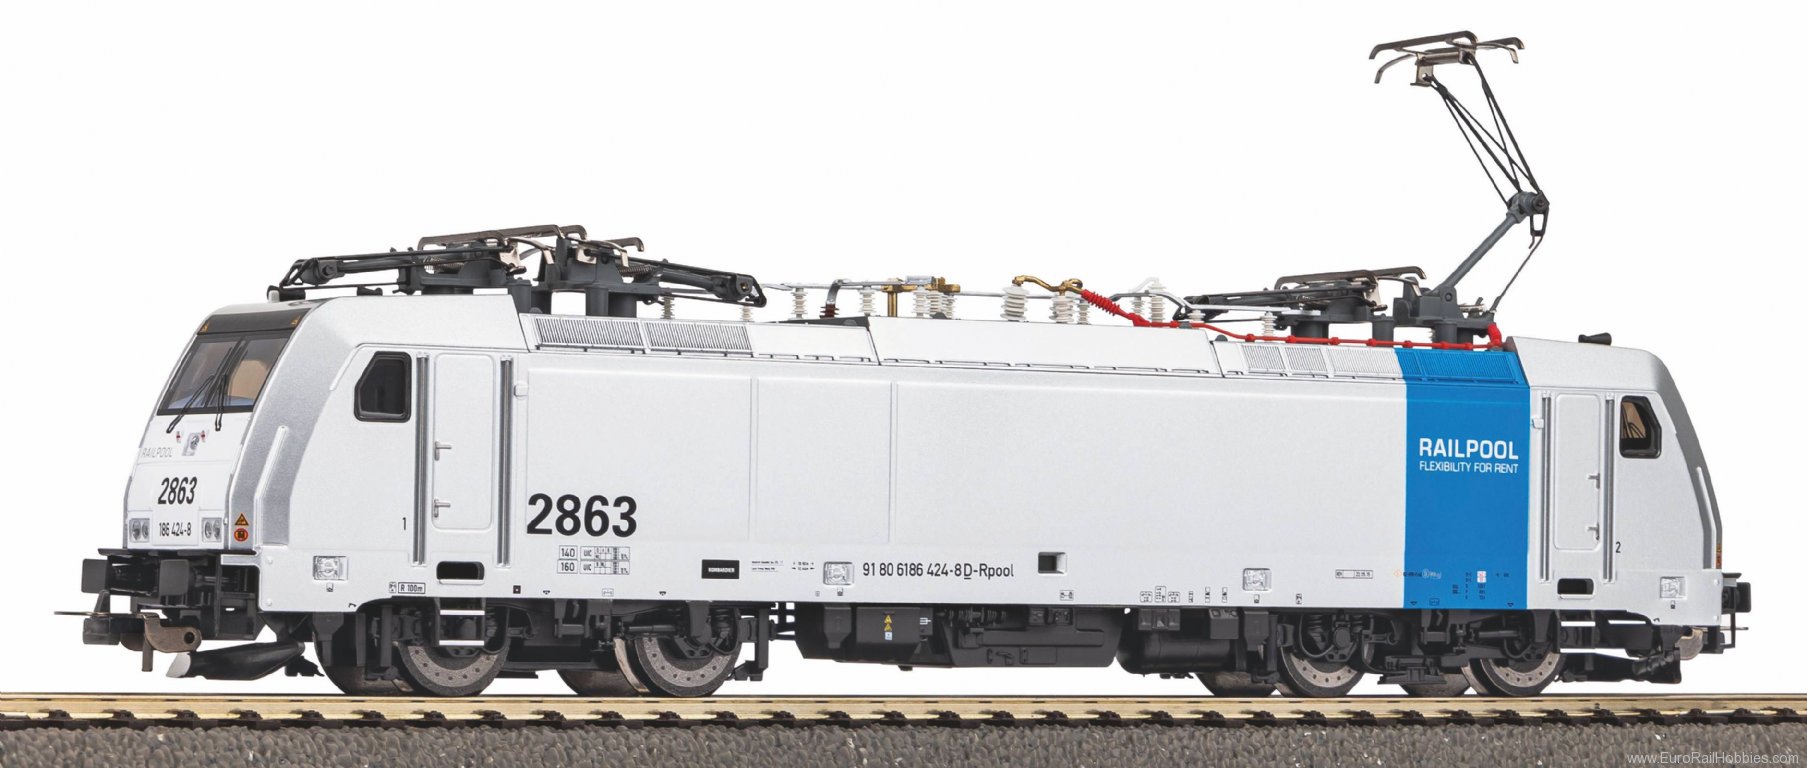 Piko 21671 Sound electric locomotive BR 186 Railpool VI 